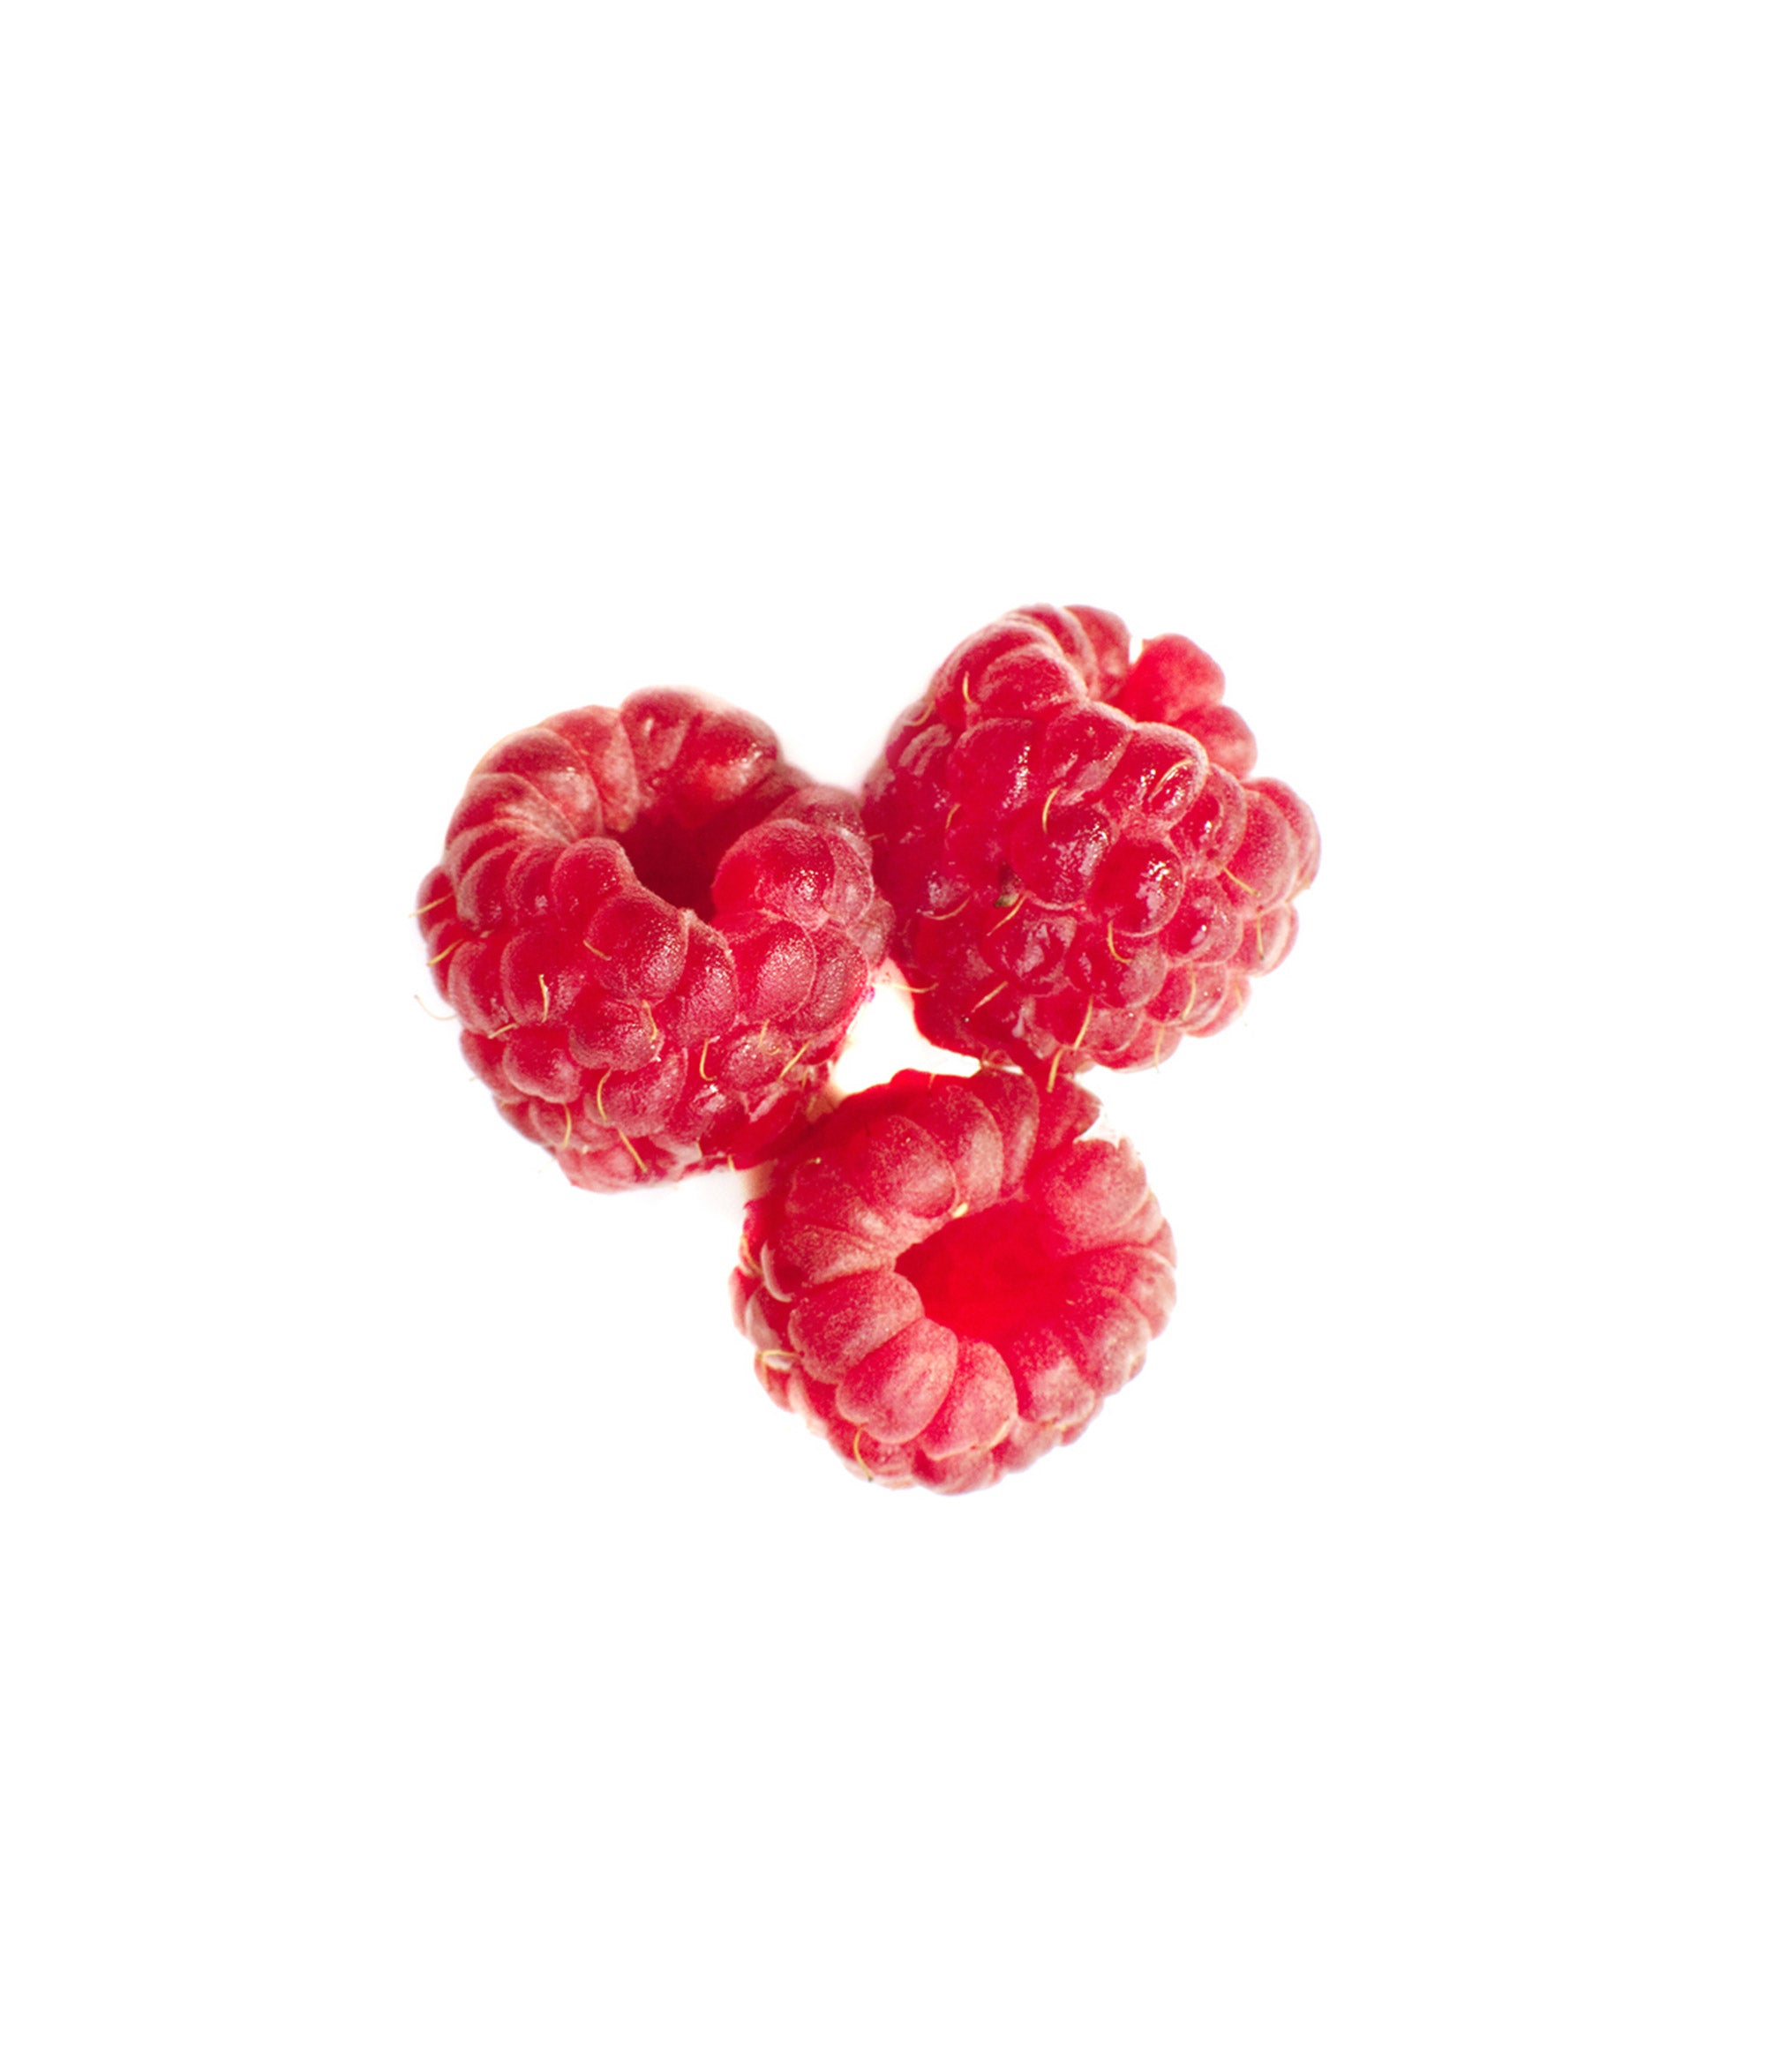 Raspberry Organic